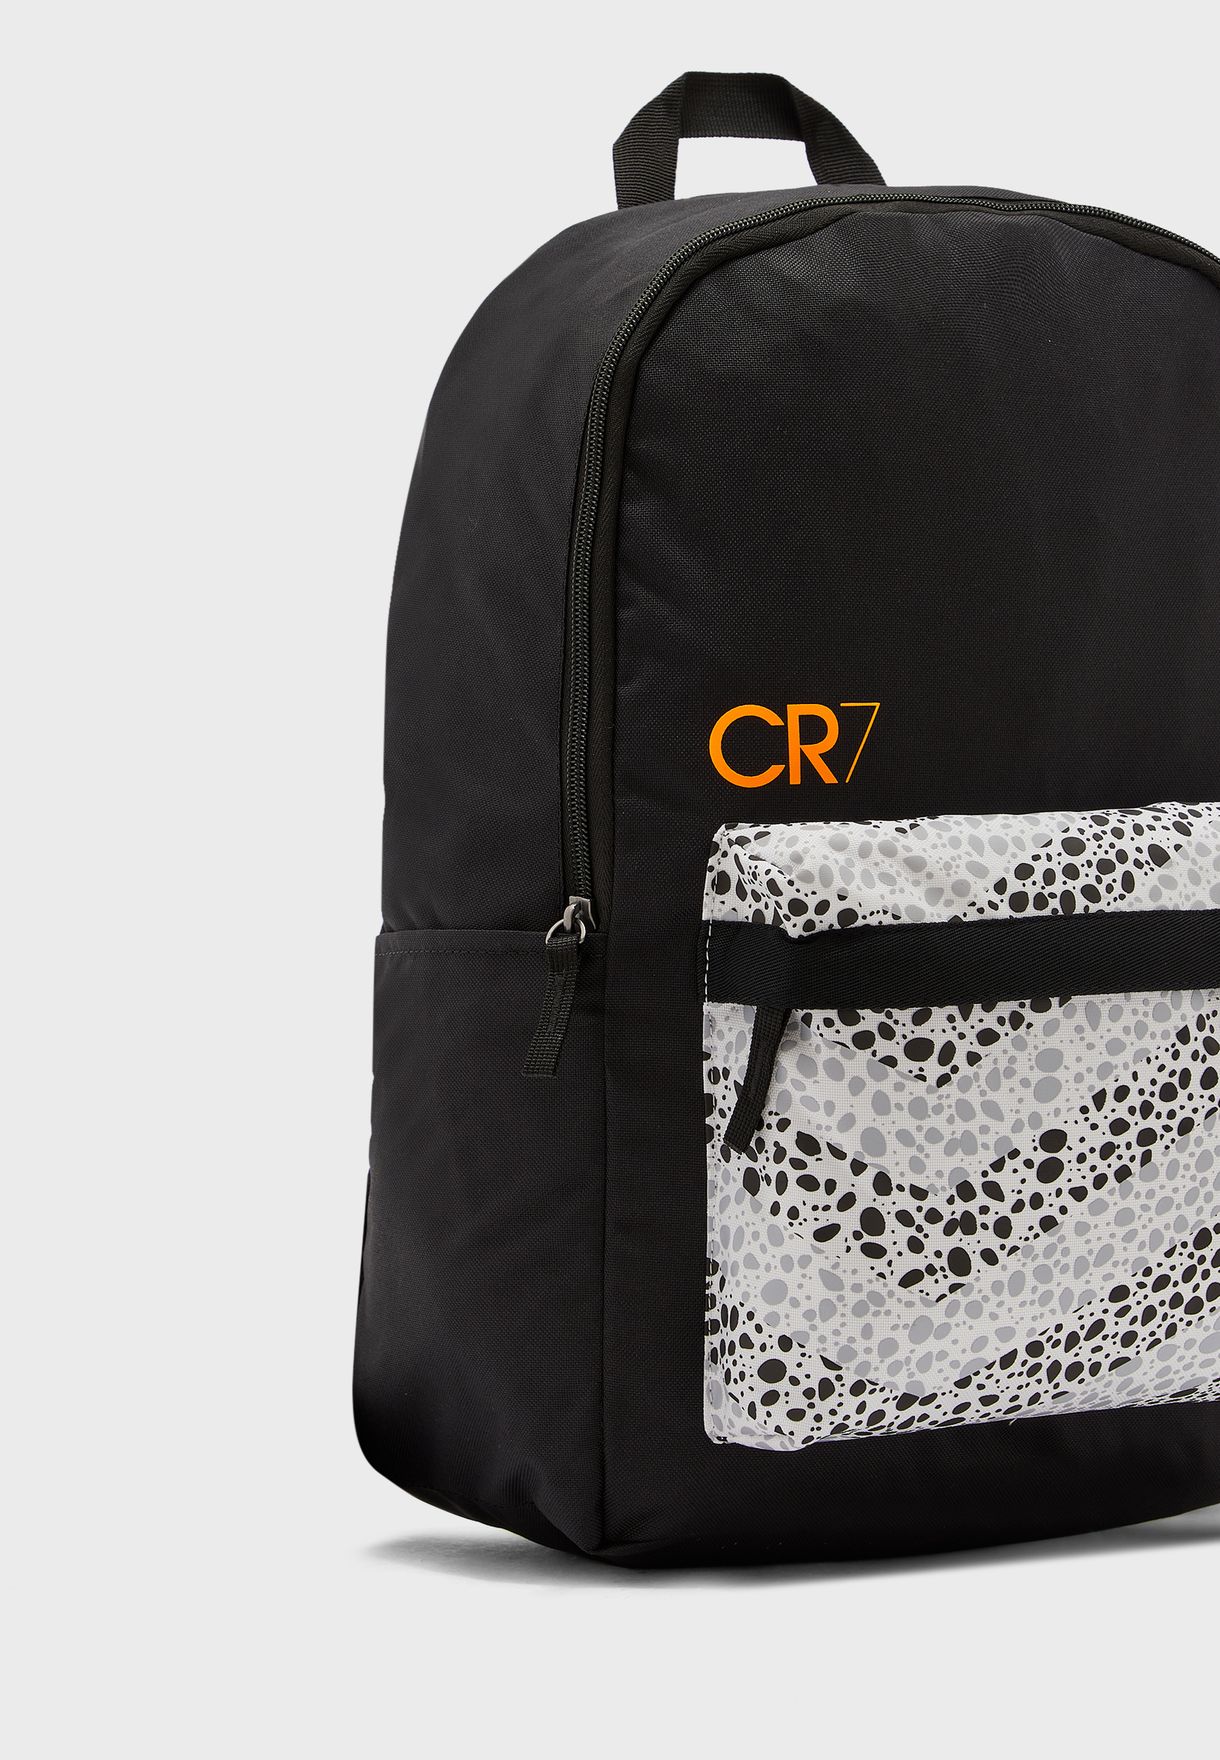 cr7 backpack